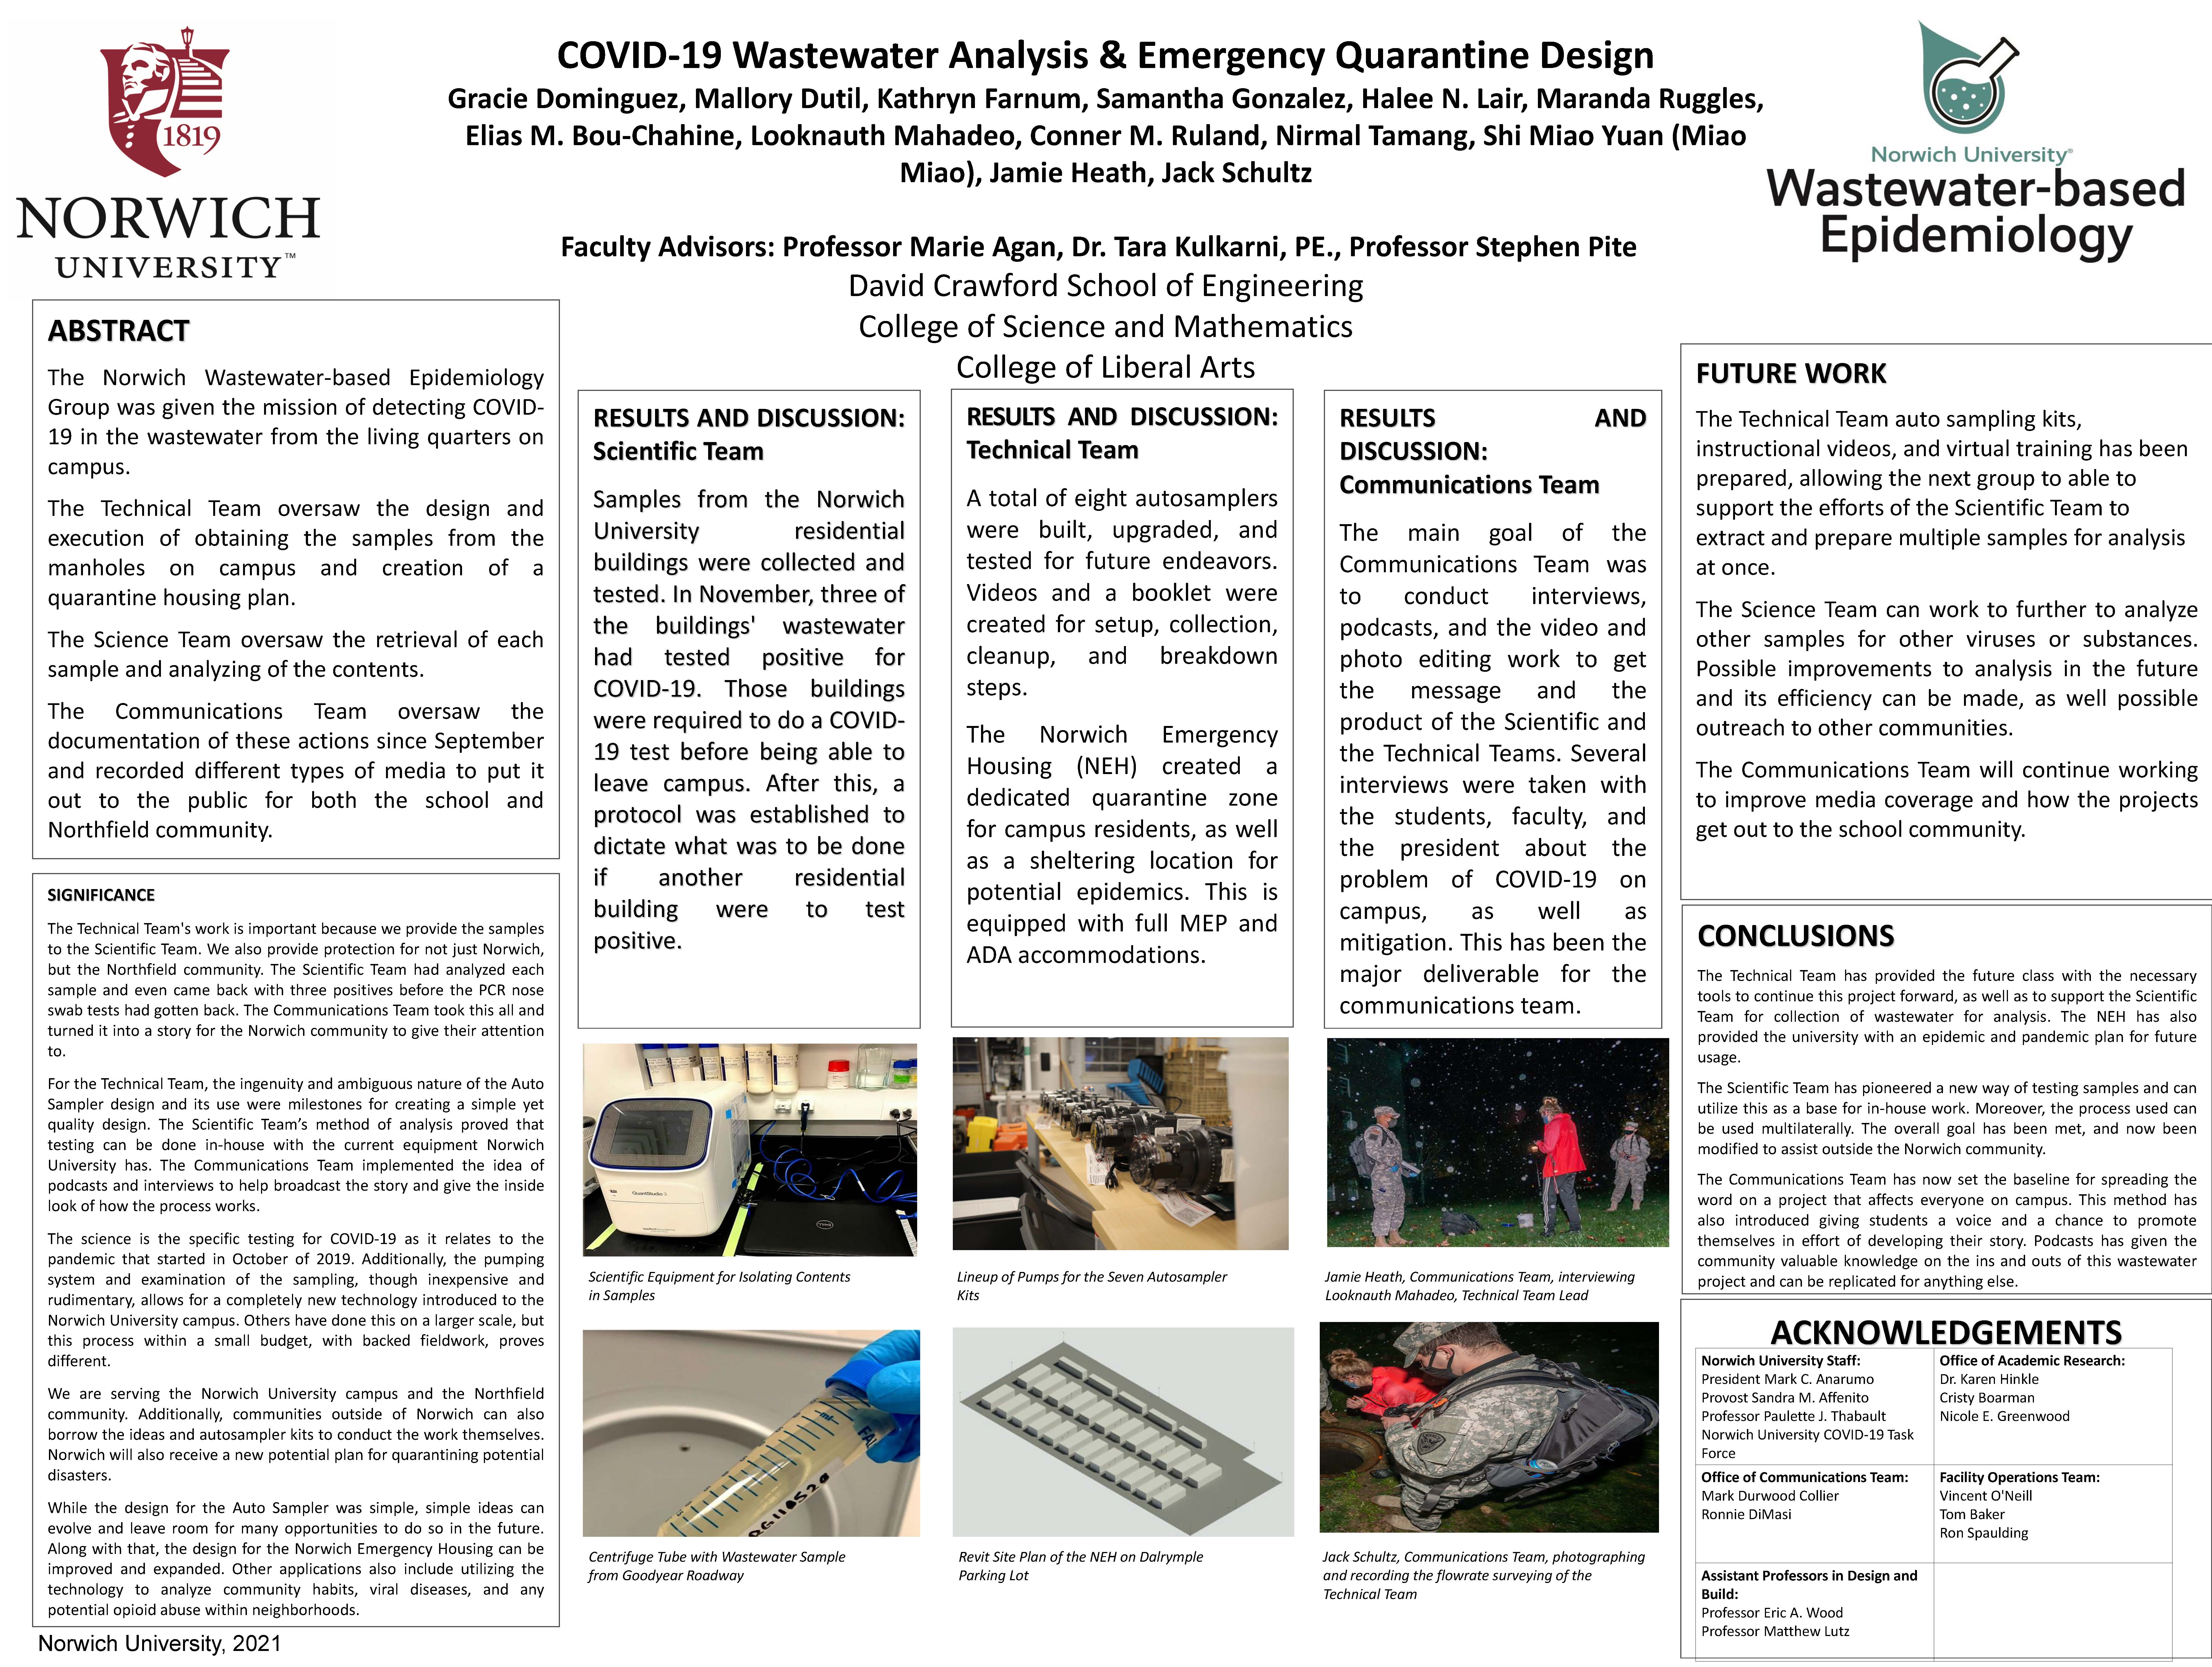 Showcase Image for COVID-19 Wastewater Analysis & Emergency Quarantine Facility Design